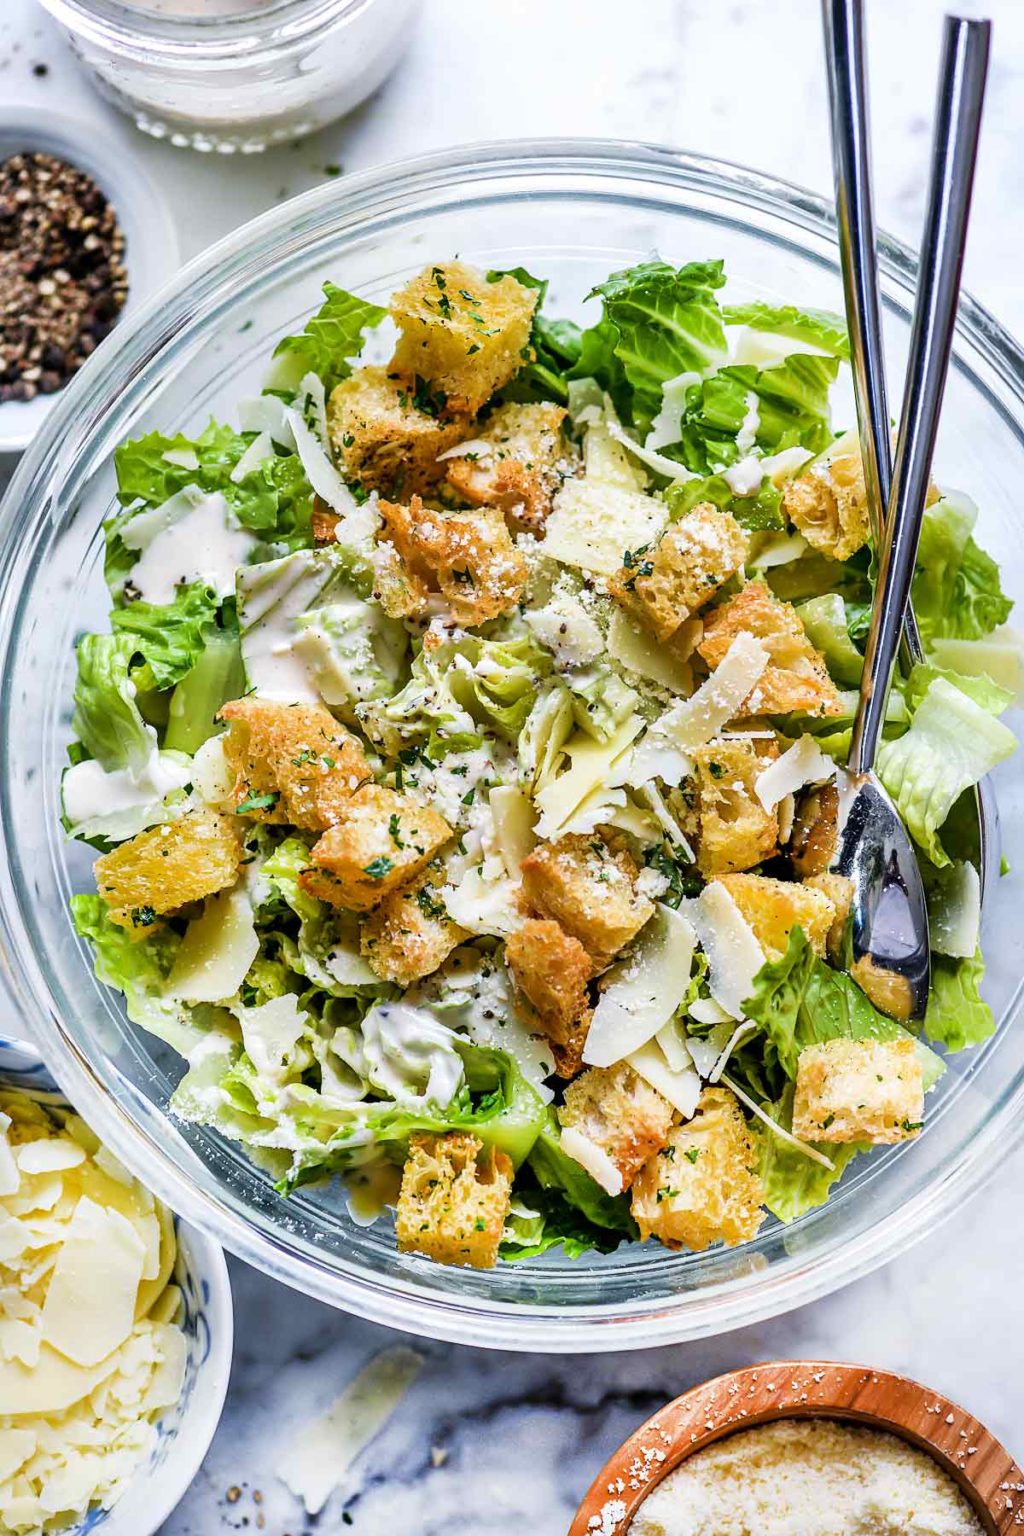 Caesar Salad Foodiecrush.com 017 1024x1536 